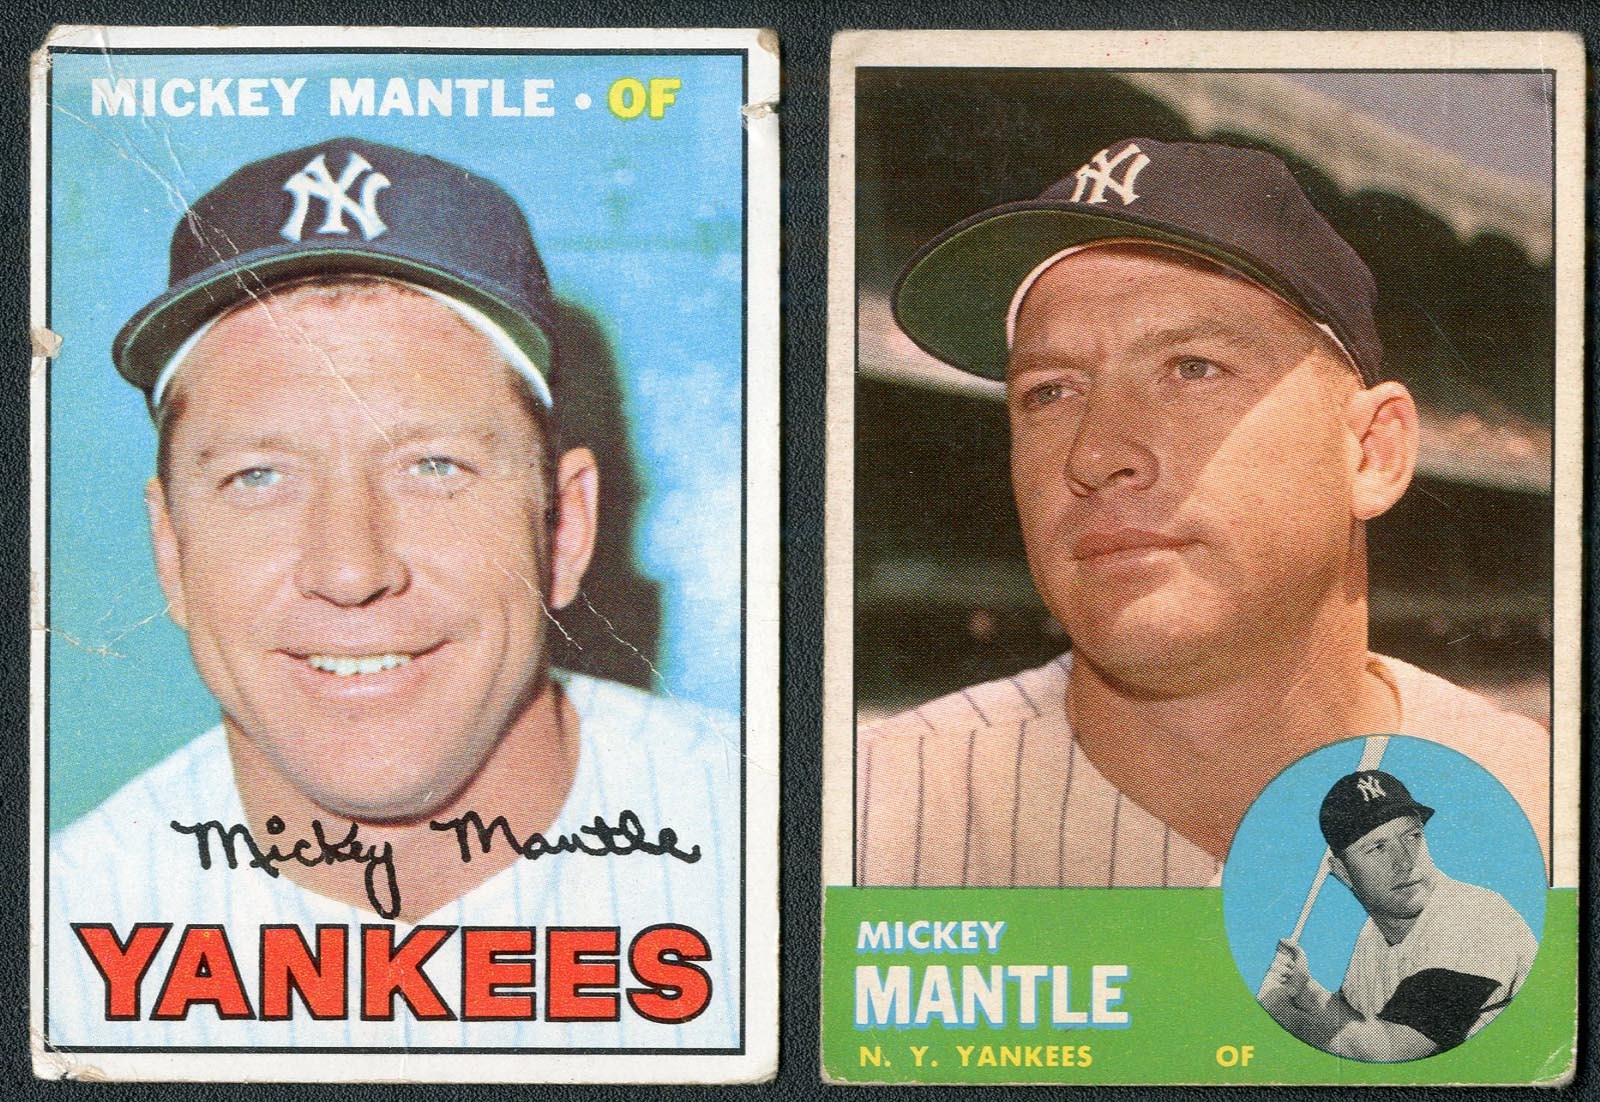 Baseball and Trading Cards - 1963 & 1967 Topps Mickey Mantle Baseball Cards